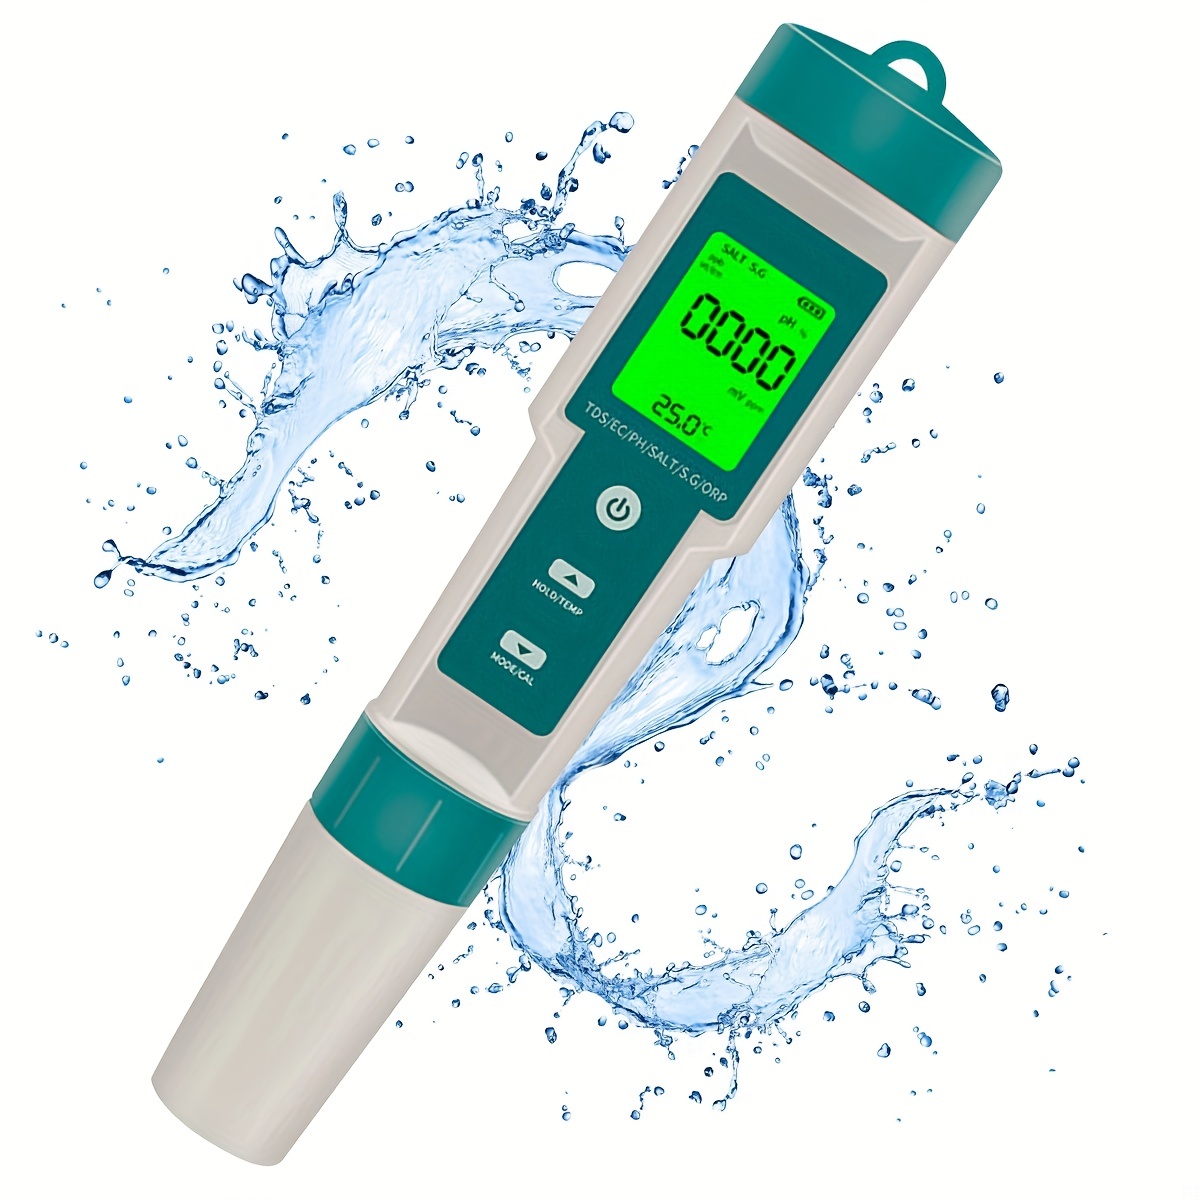 Ph Ec Temp Meter Wifi  Water Quality Tester - 8-in-1 Digital